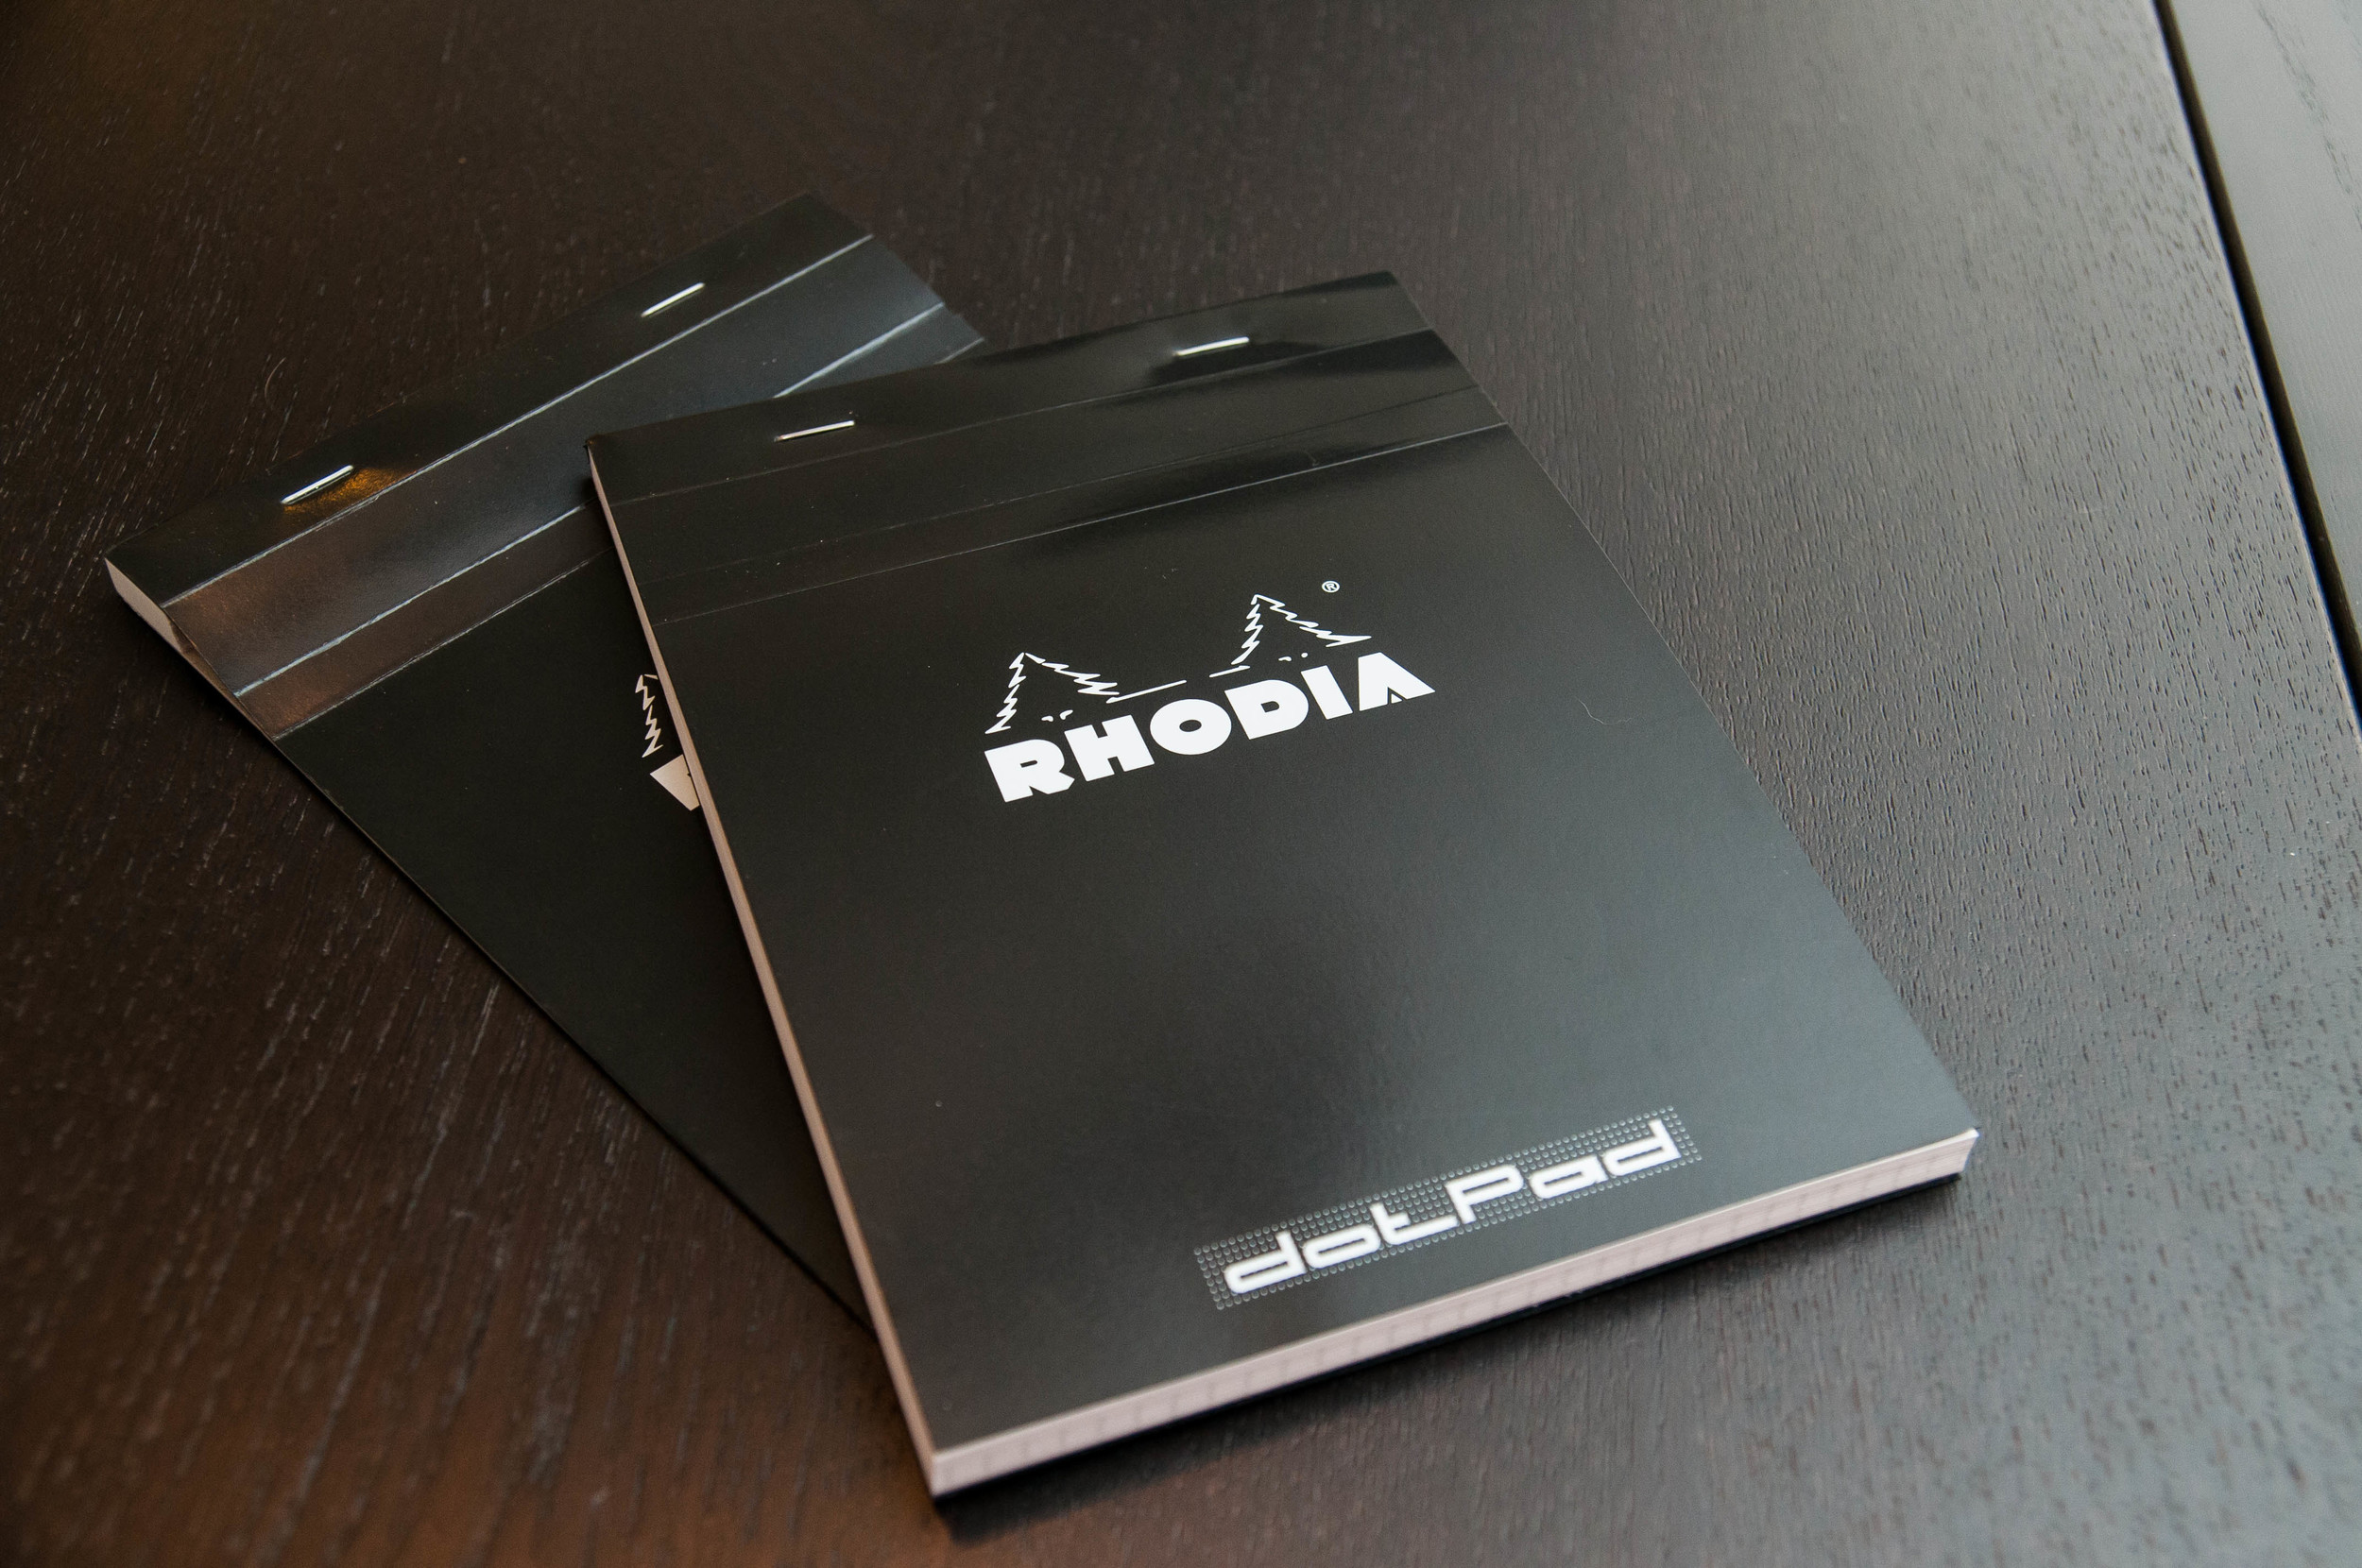 Rhodia Classic - Bloc notes à spirales - A5 - 80 pages - petits